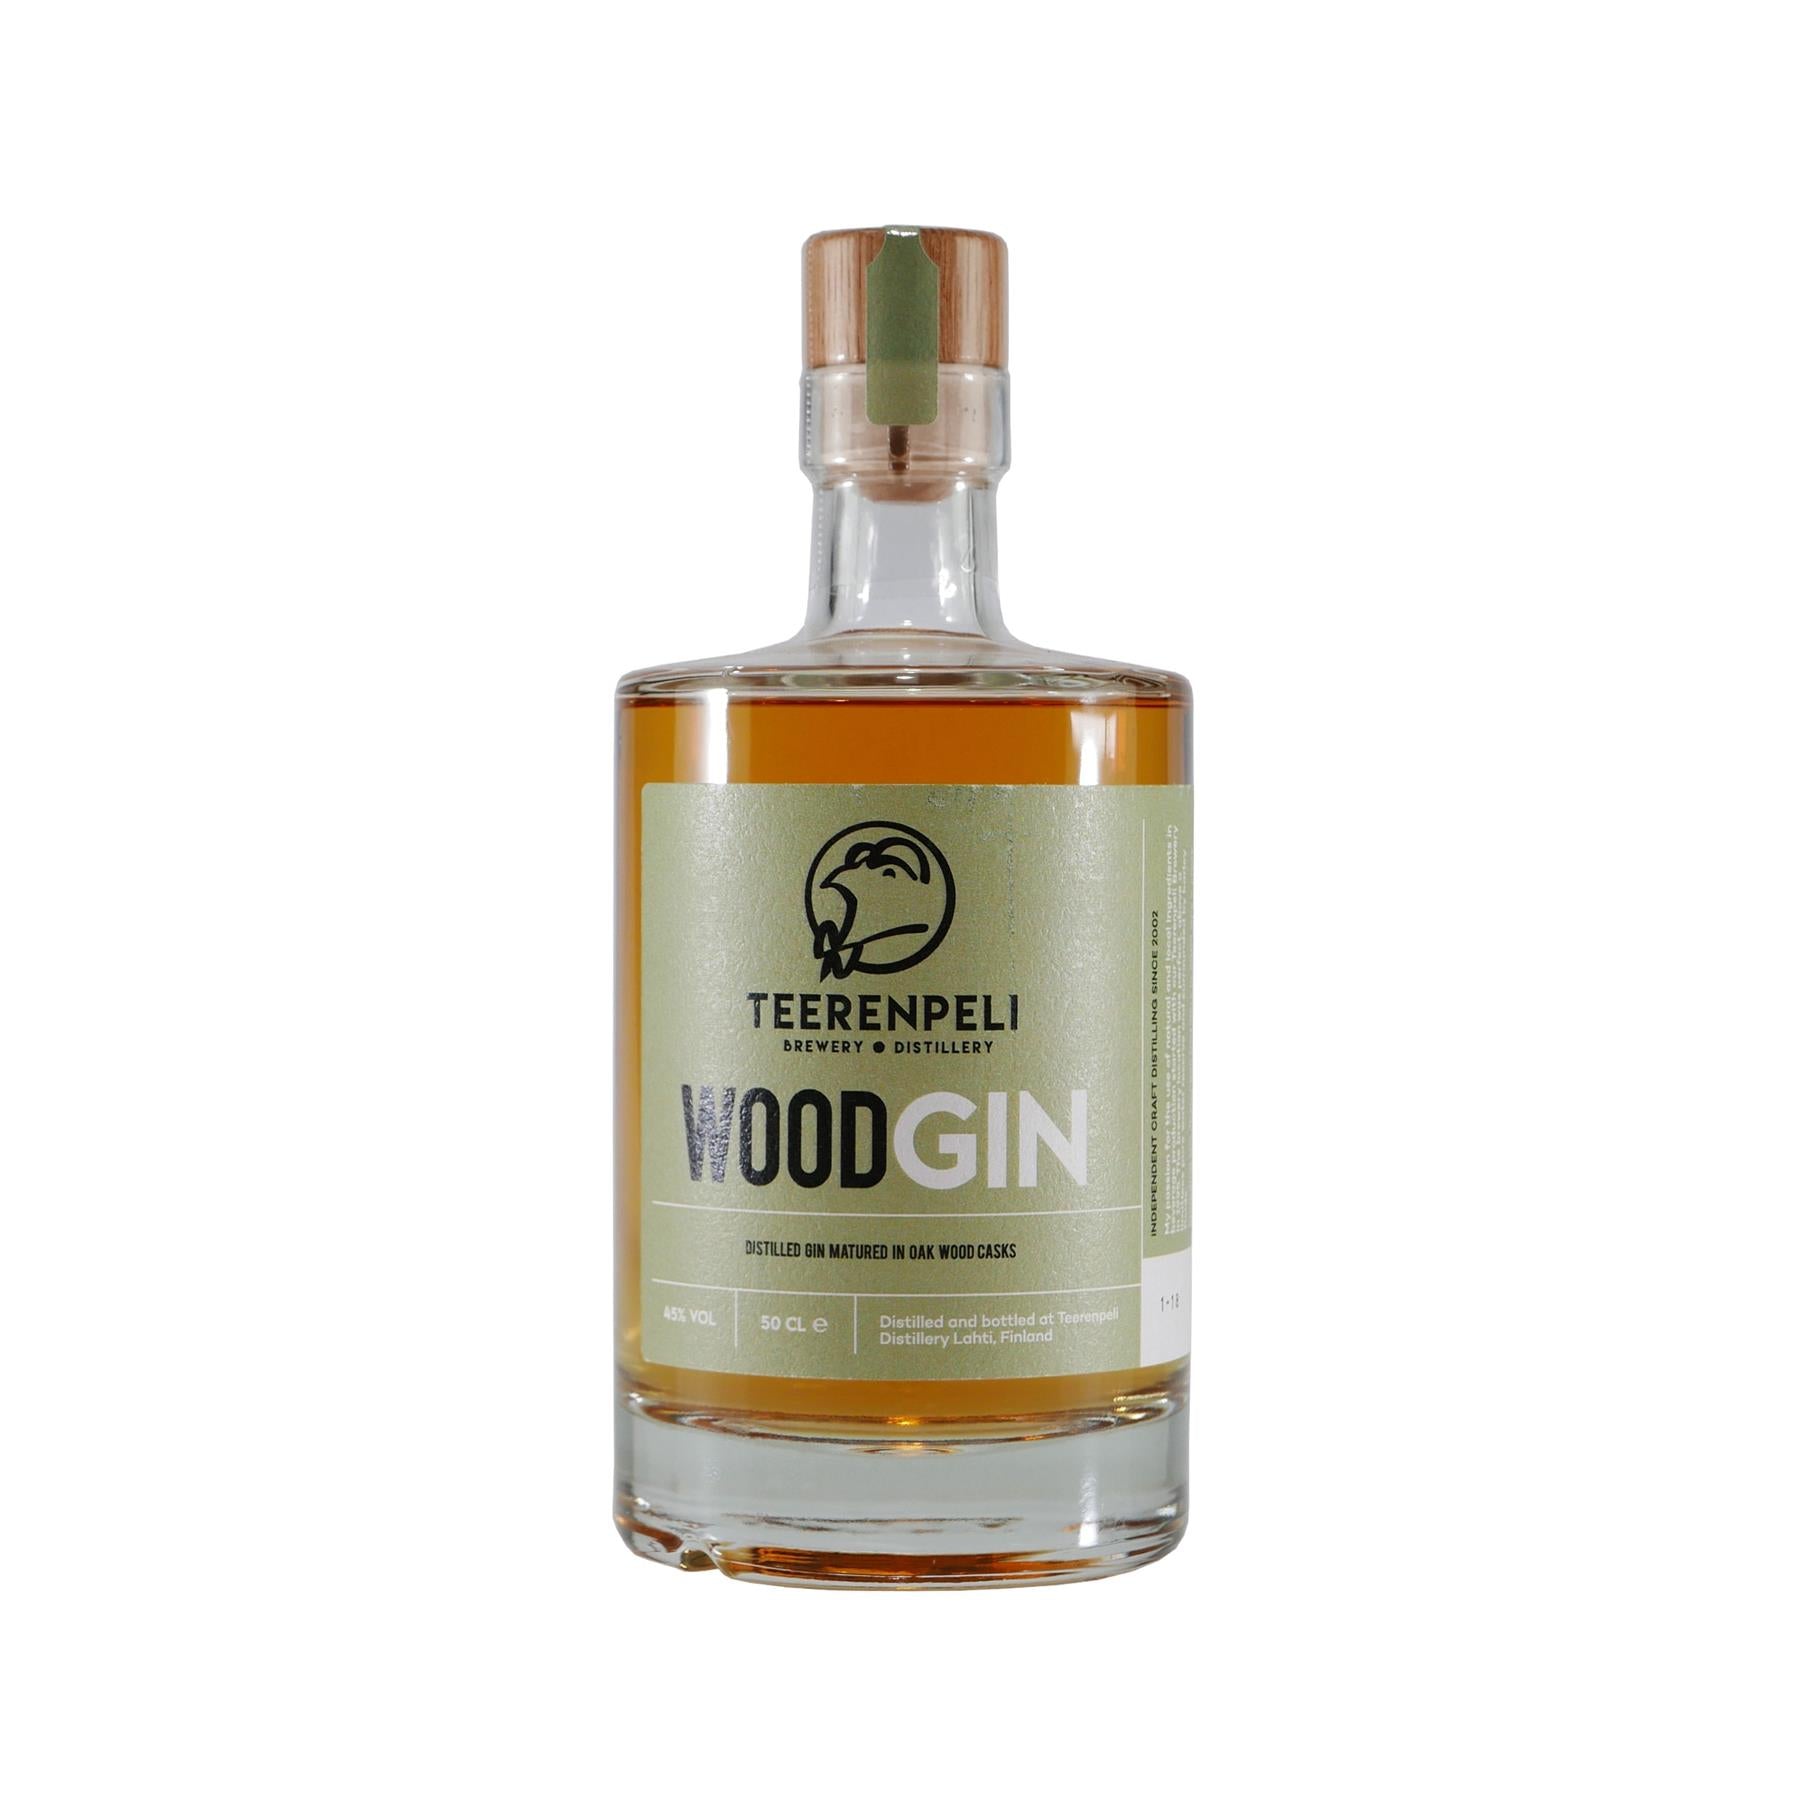 Teerenpeli Reserve Wood Gin